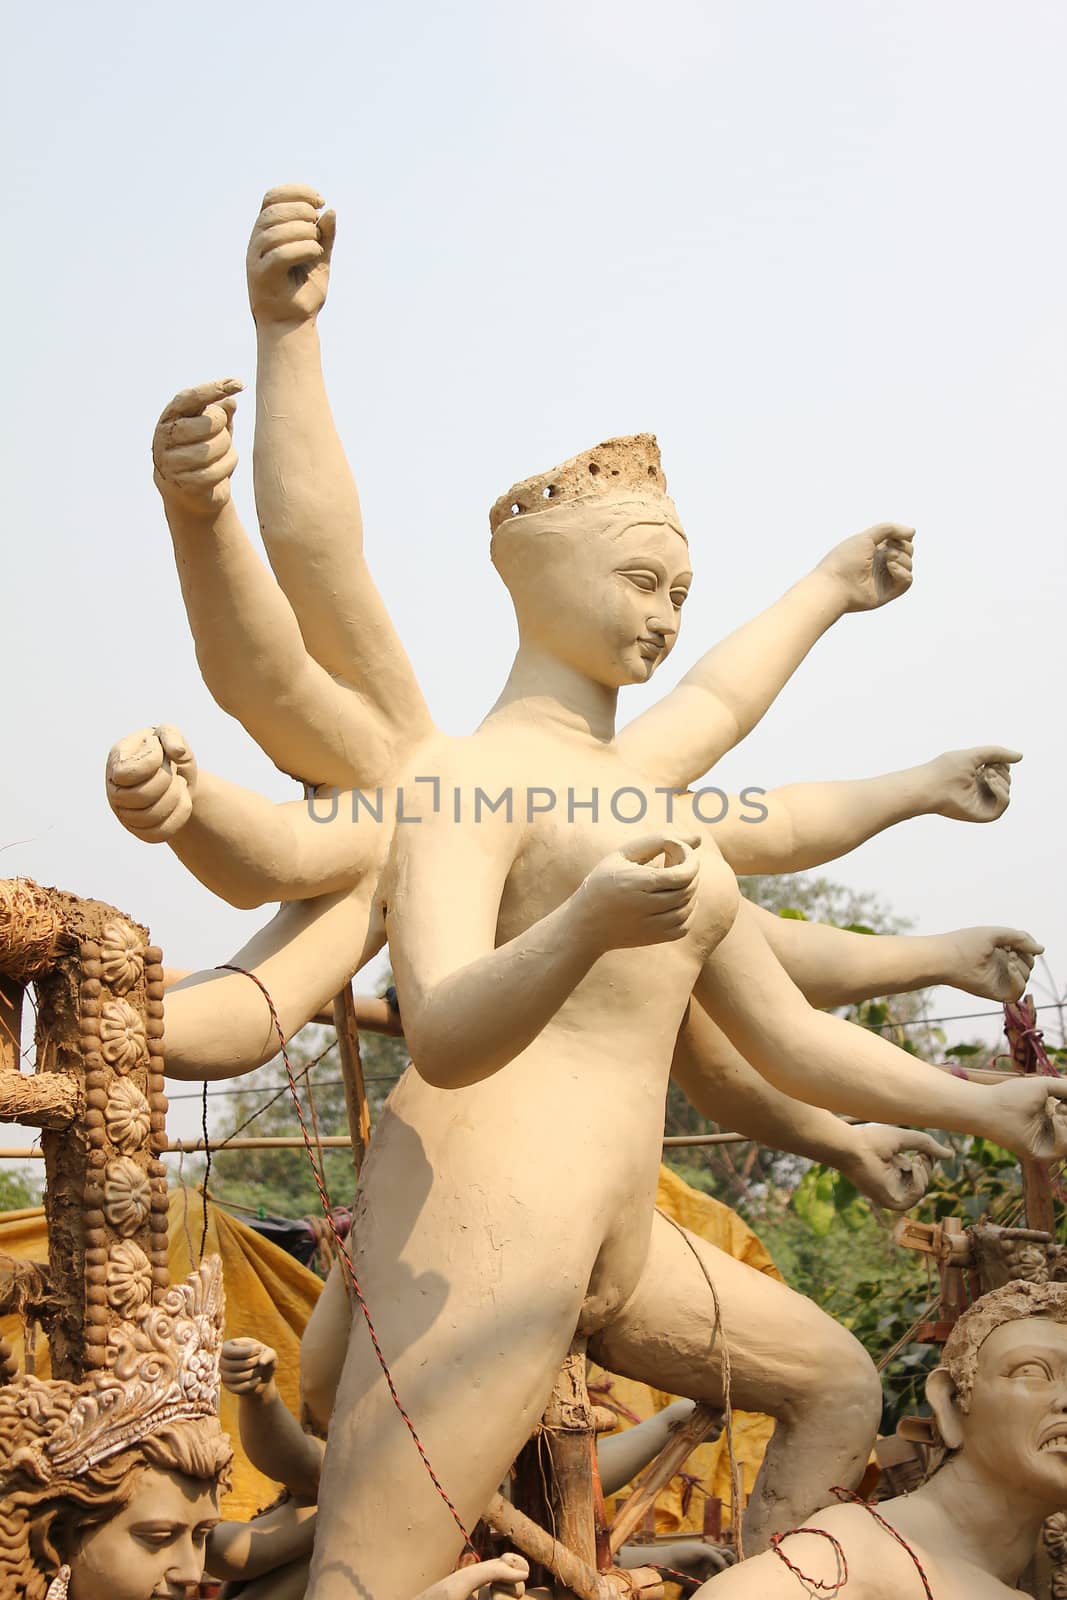 durga sculpture making by motionkarma